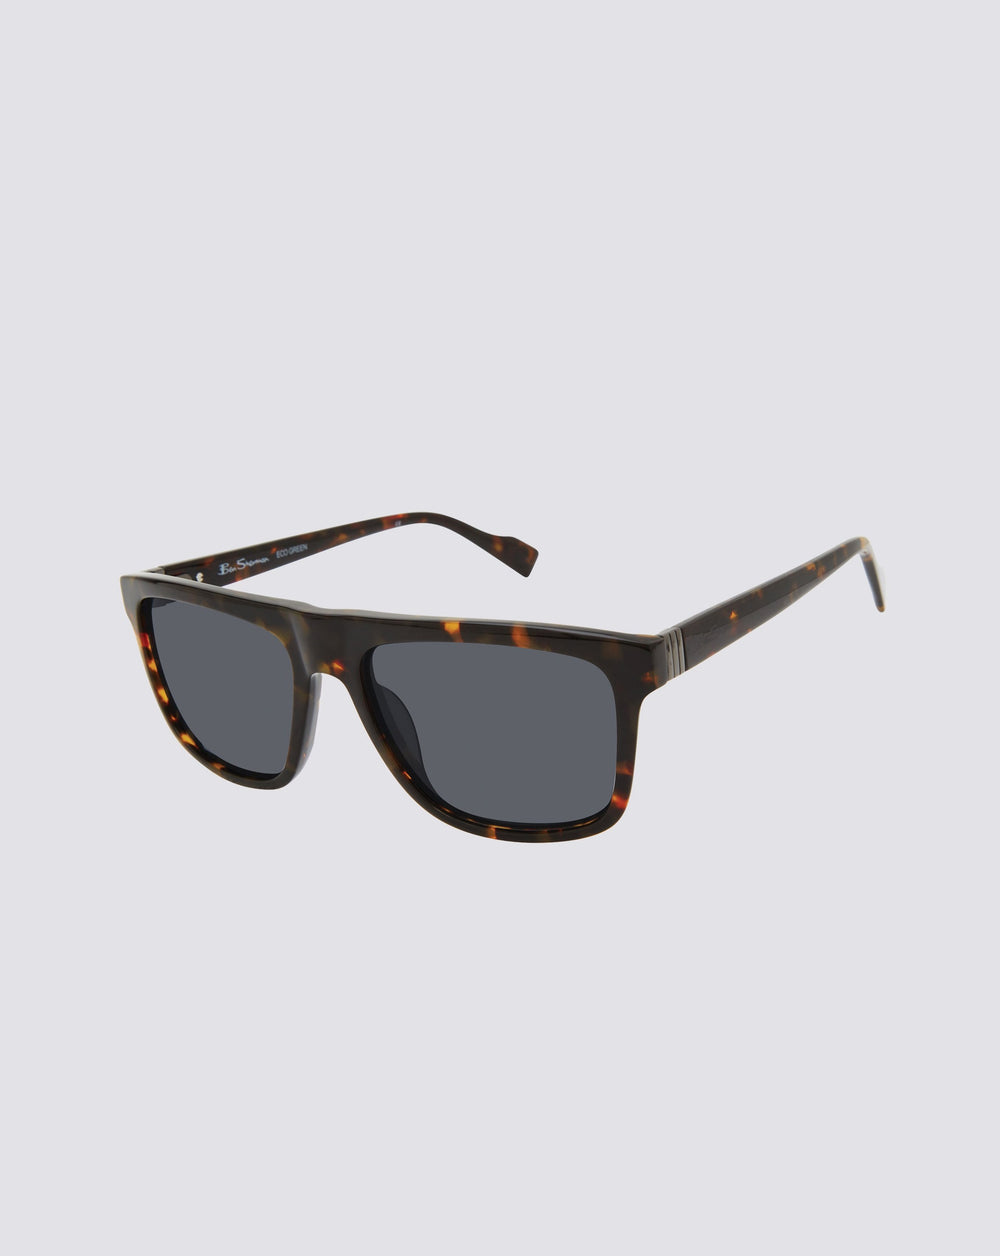 Kings Polarized Retro Square Eco Sunglasses - Tortoise